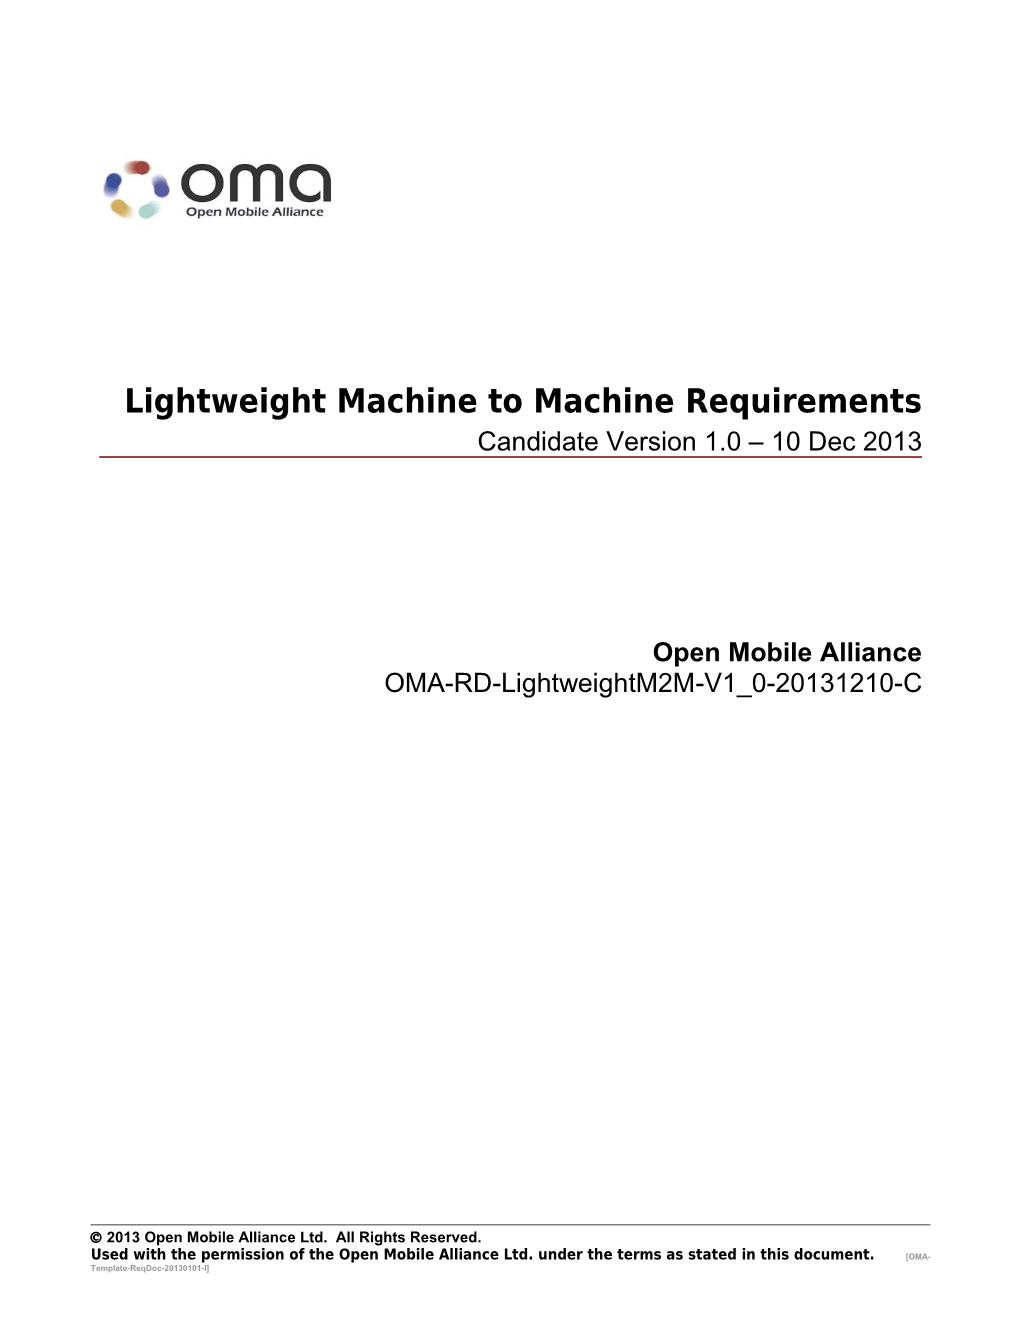 OMA-RD-Lightweightm2m-V1 0-20131210-Cpage 1 V(19)